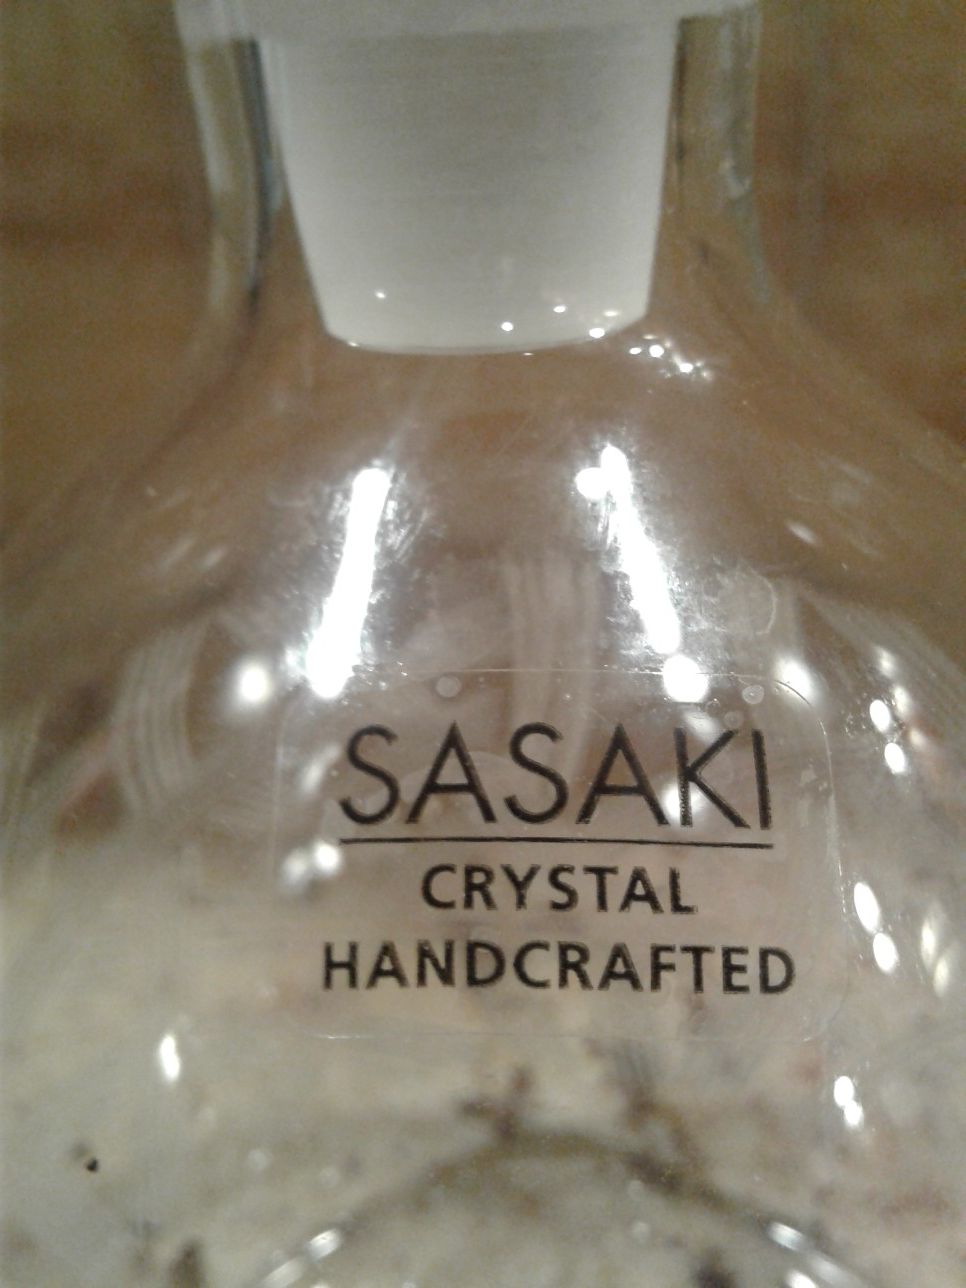 Sassaki designer carafe.